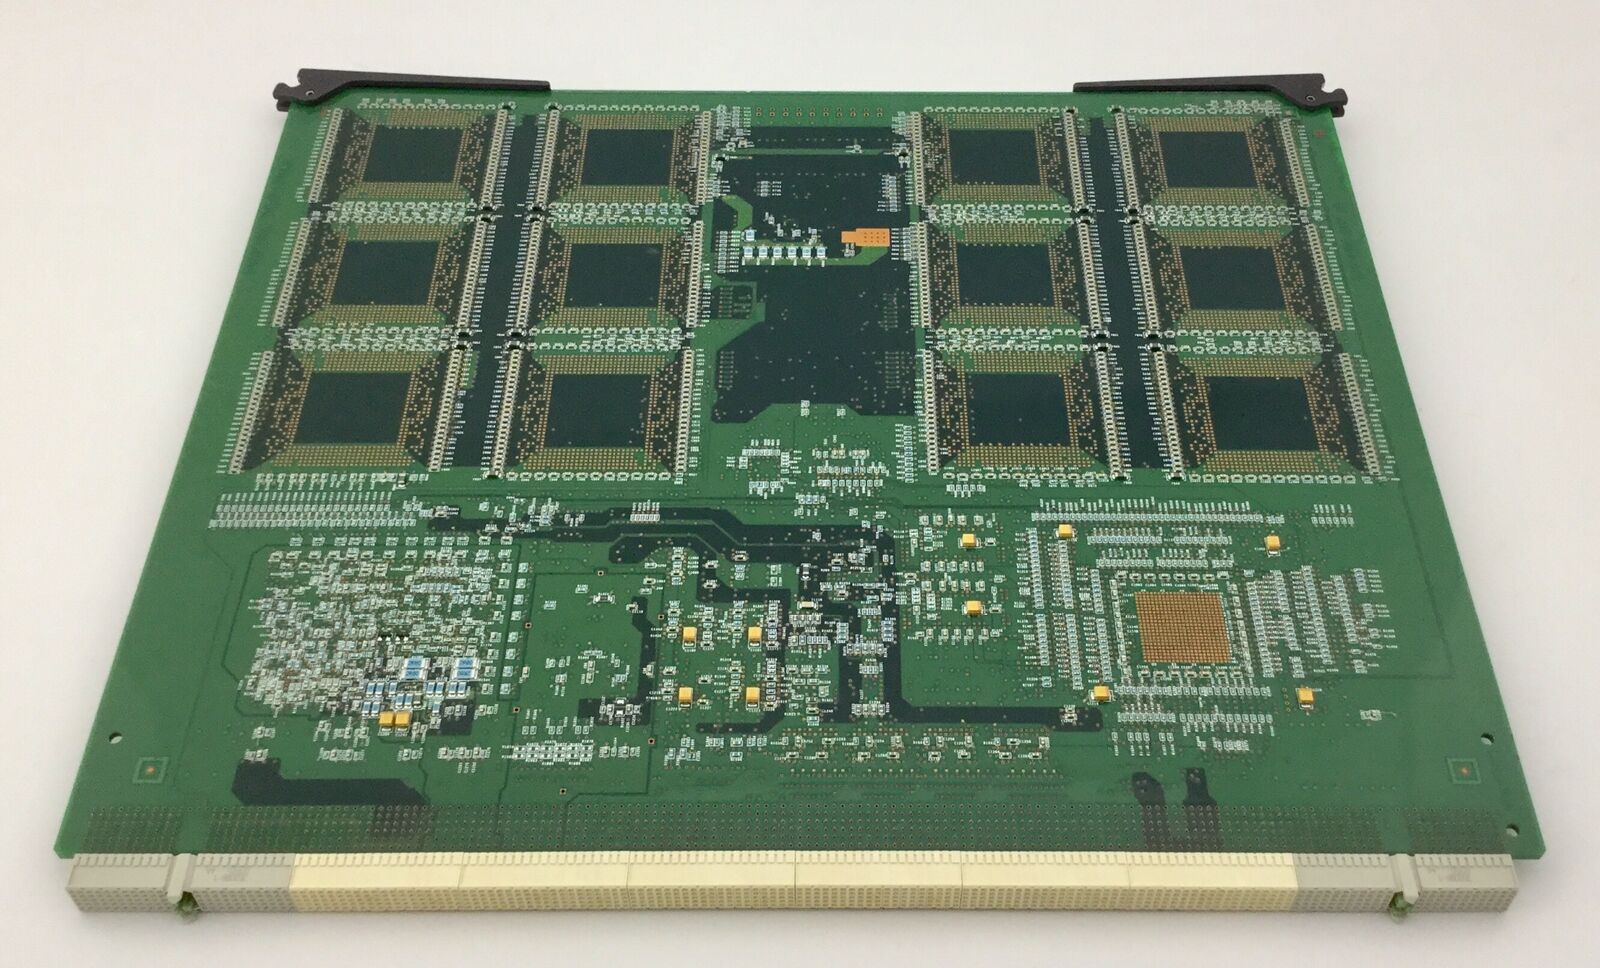 Toshiba  SSA-770A Ultrasound PM30-32088 Receive Control Board DIAGNOSTIC ULTRASOUND MACHINES FOR SALE